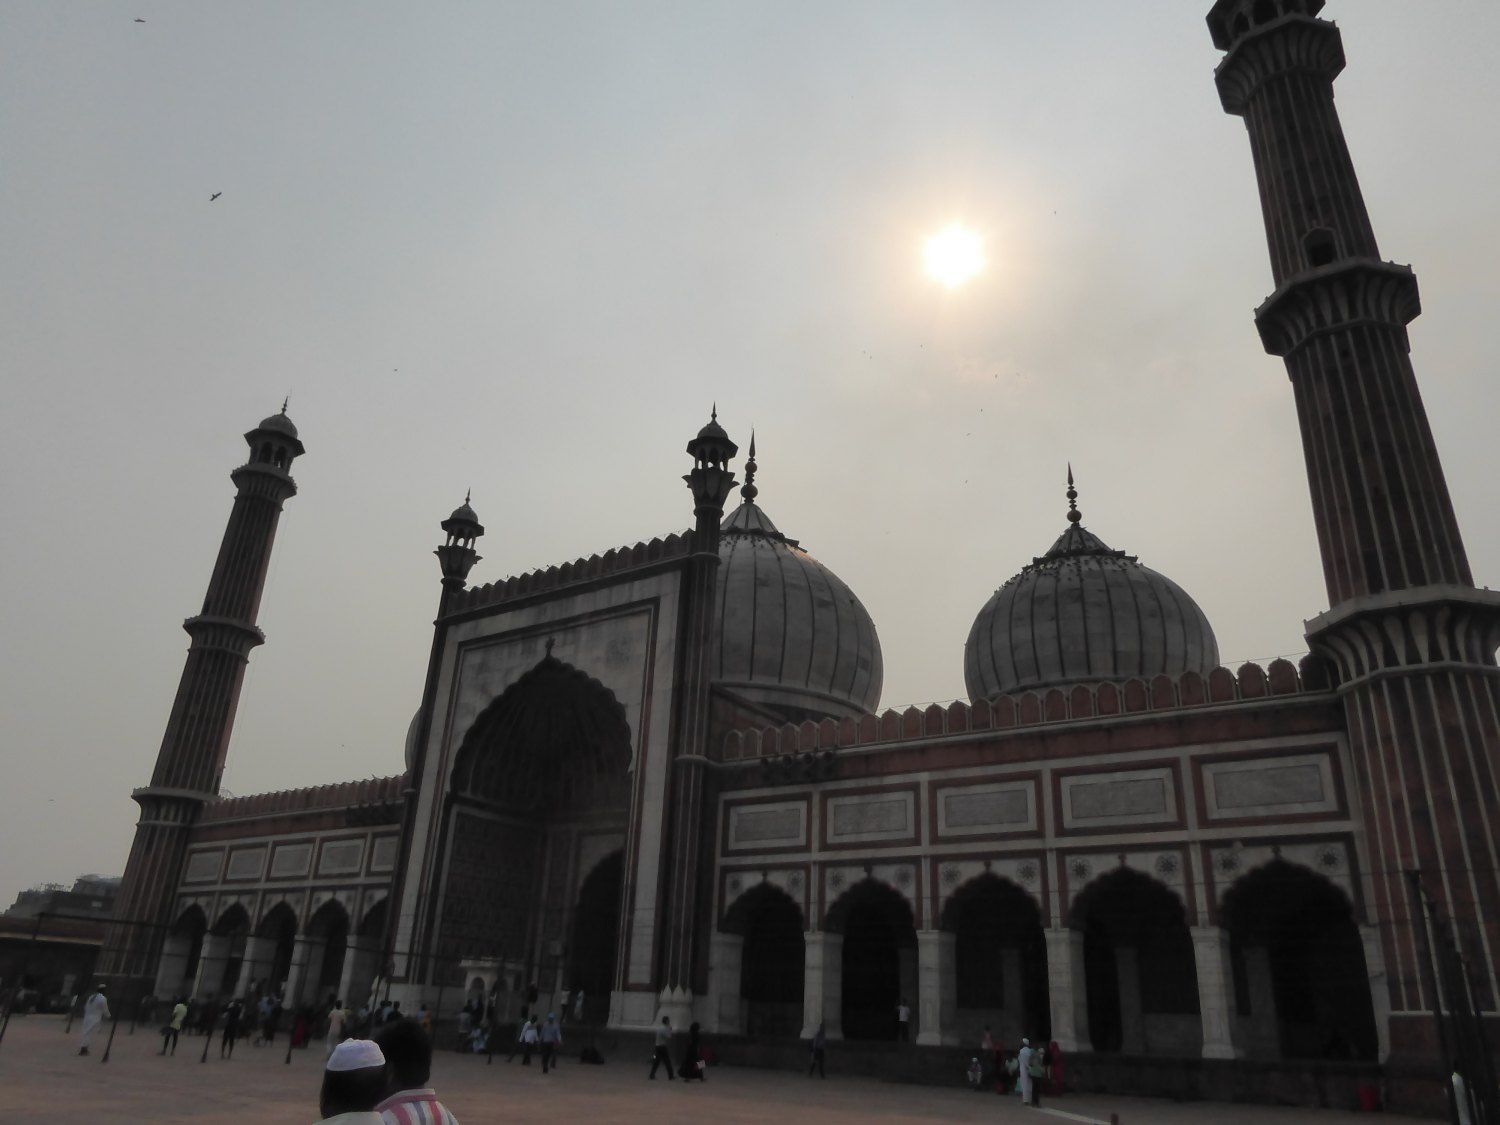 Jama Masjid in Delhi